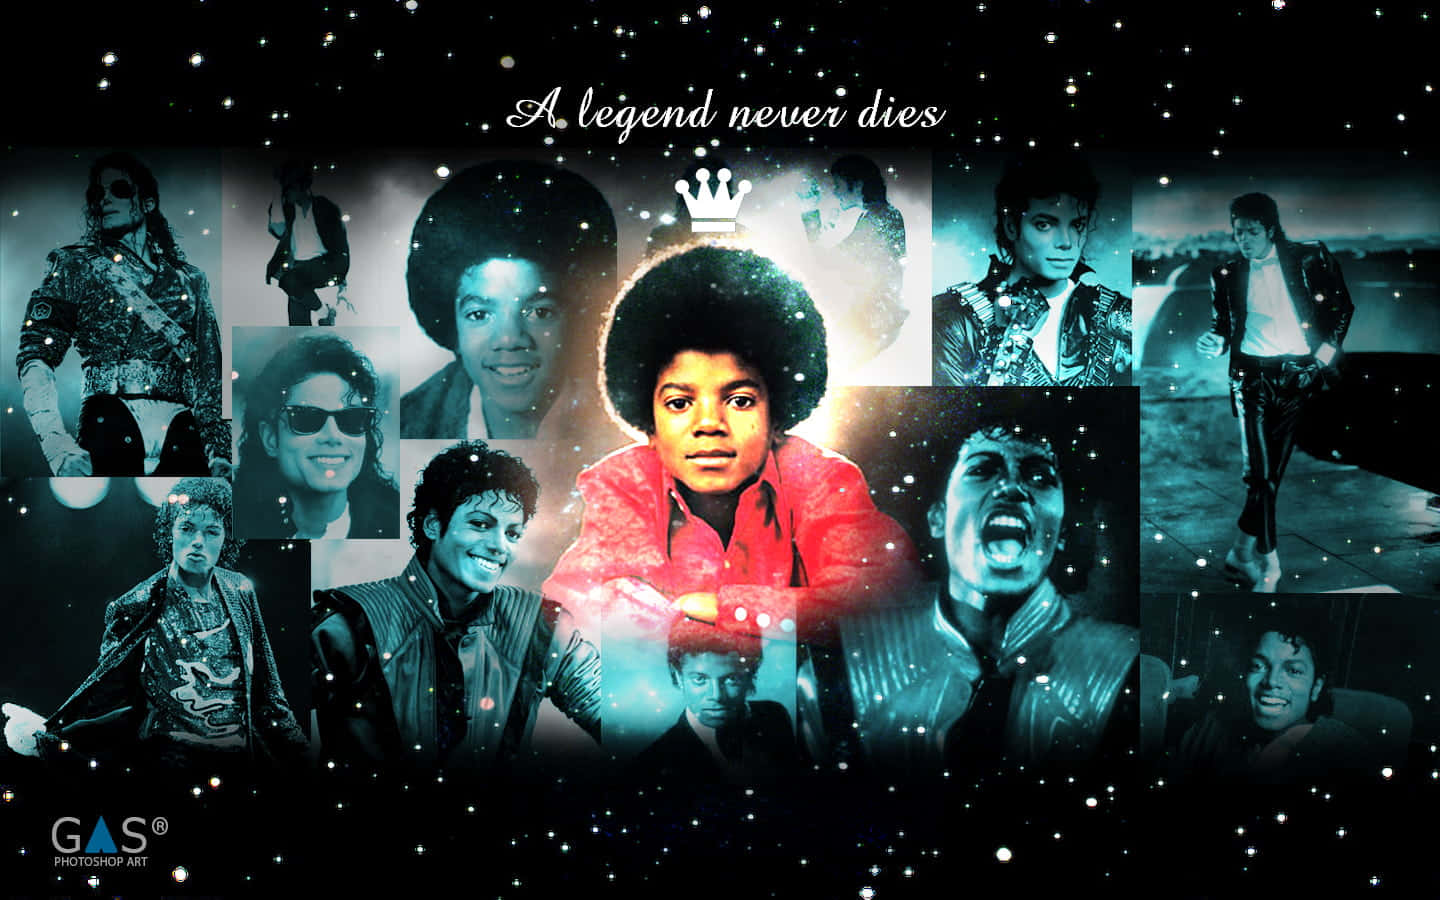 Giovanere Del Pop, Michael Jackson